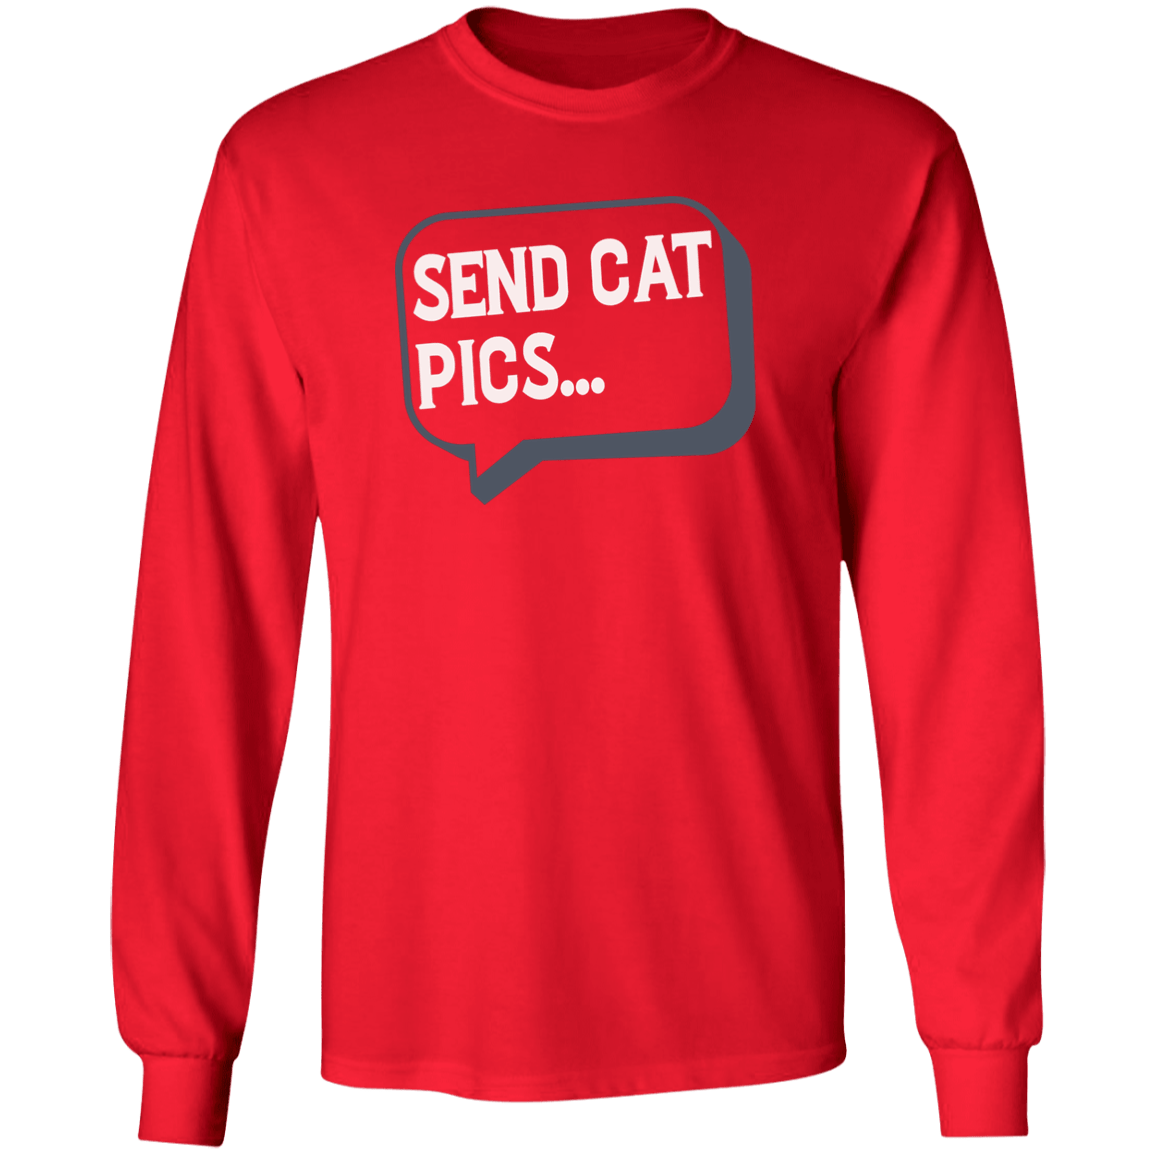 Send Cat Pics - Long Sleeve T Shirt.